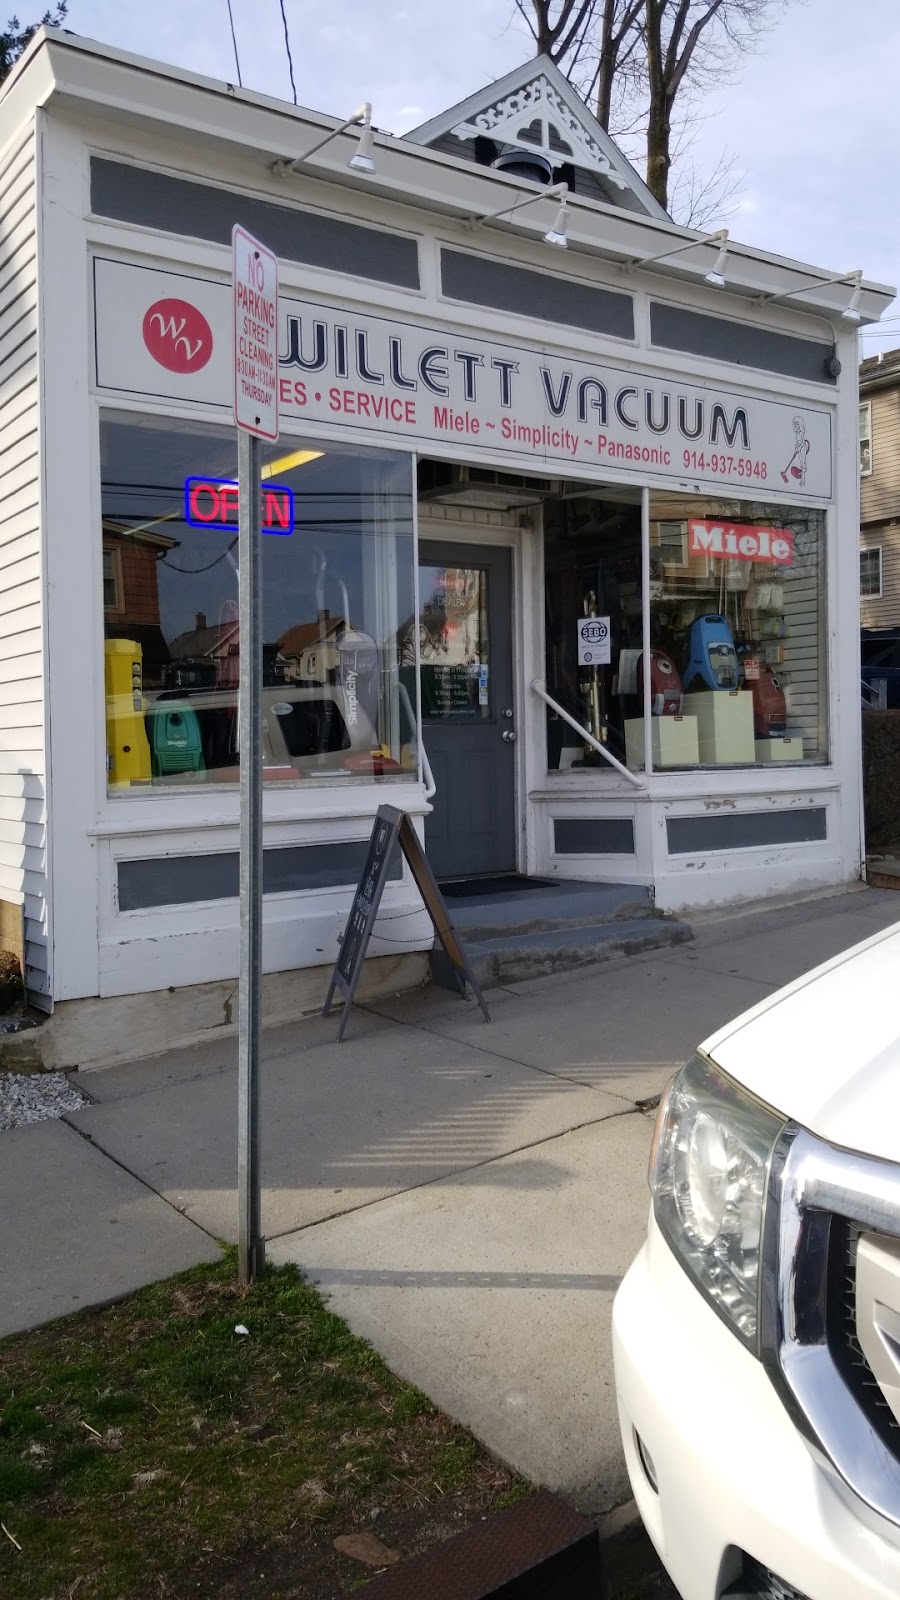 Willett Vacuums | 440 Willett Ave, Port Chester, NY 10573 | Phone: (914) 937-5948